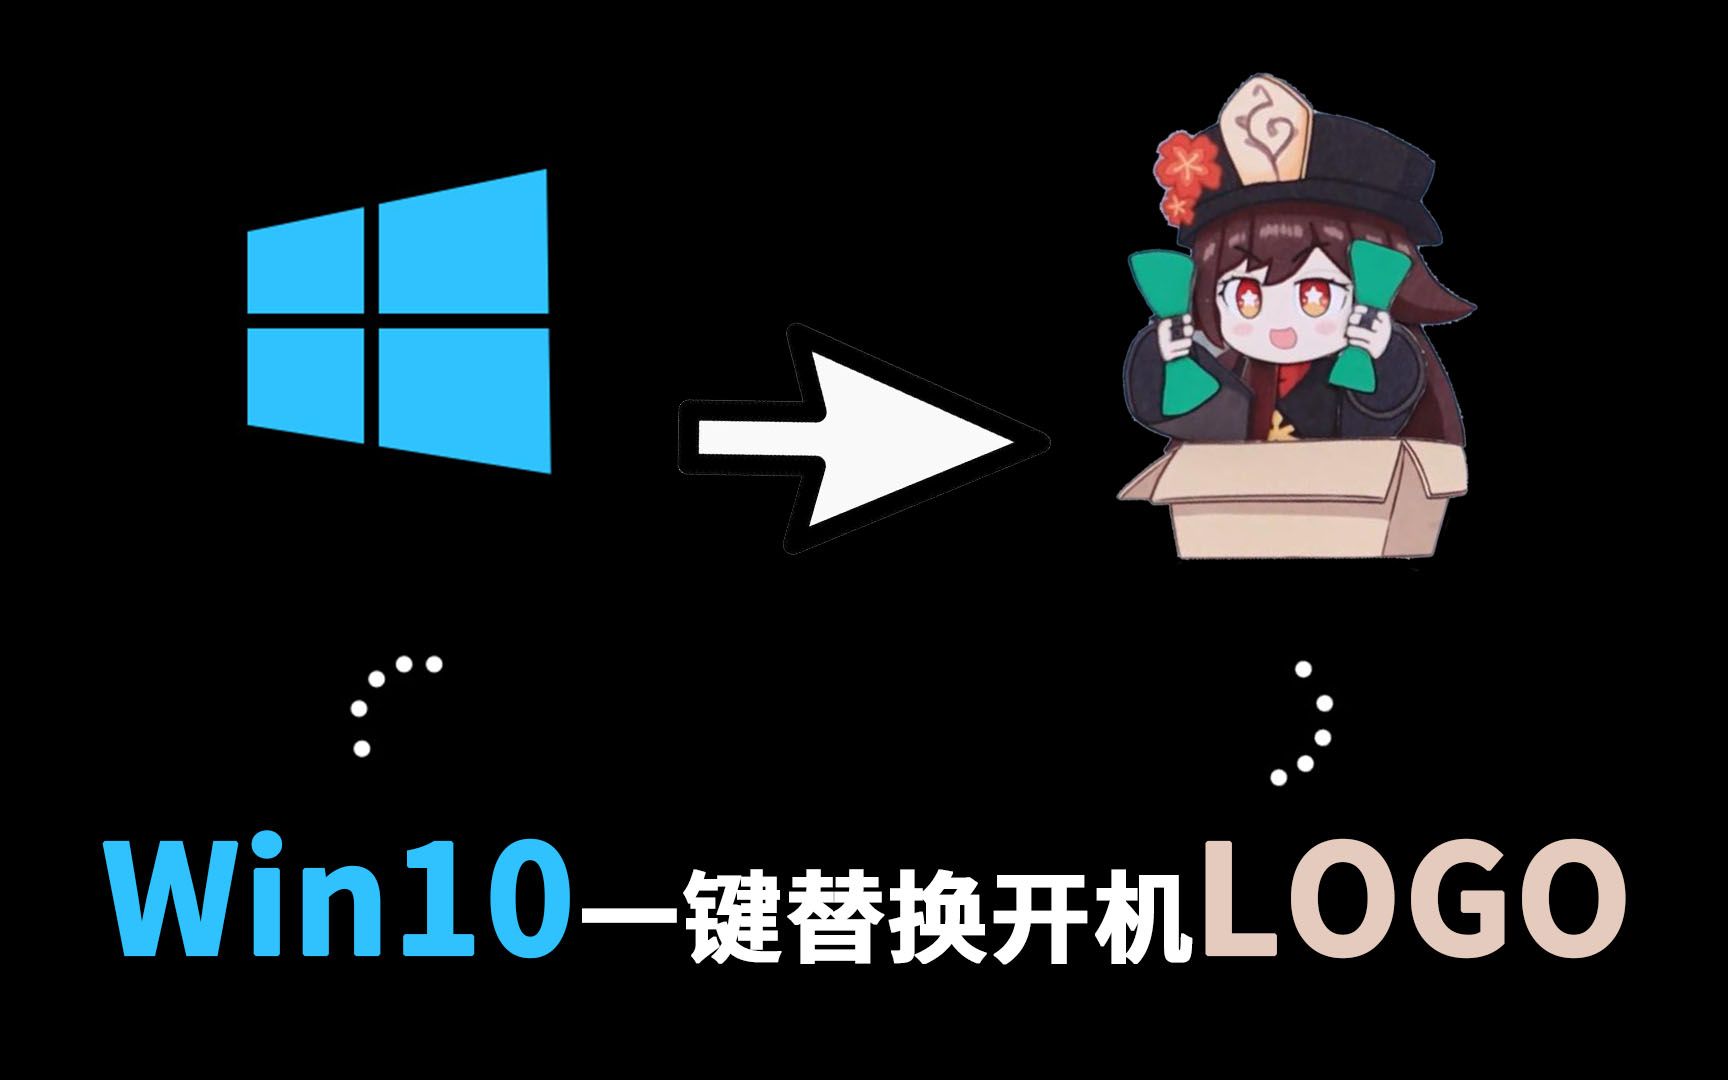 win10一键替换原神开机图标logo，打造你的二次元个性化操作系统